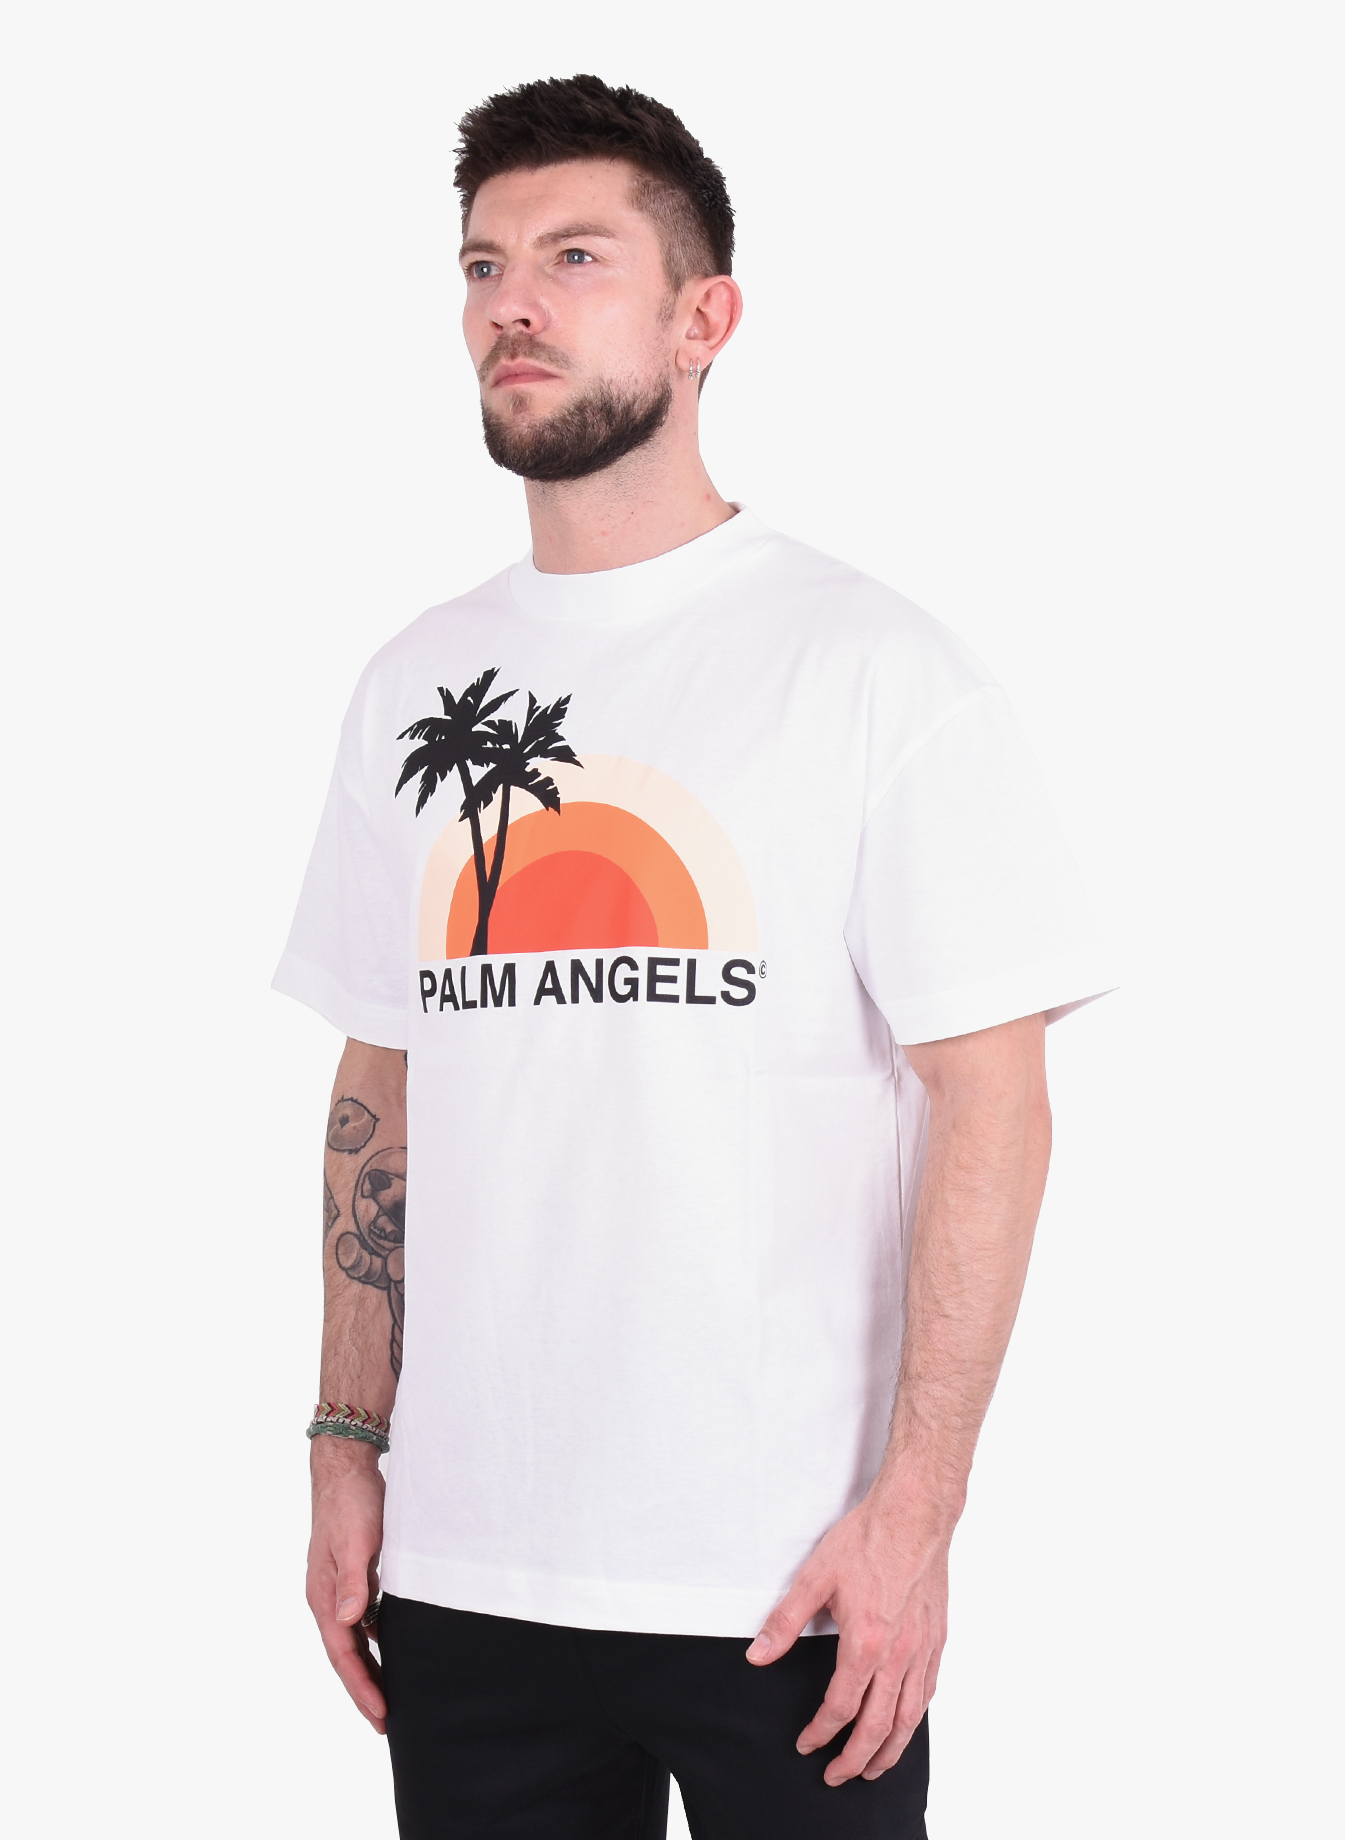 palm angels sunset tee